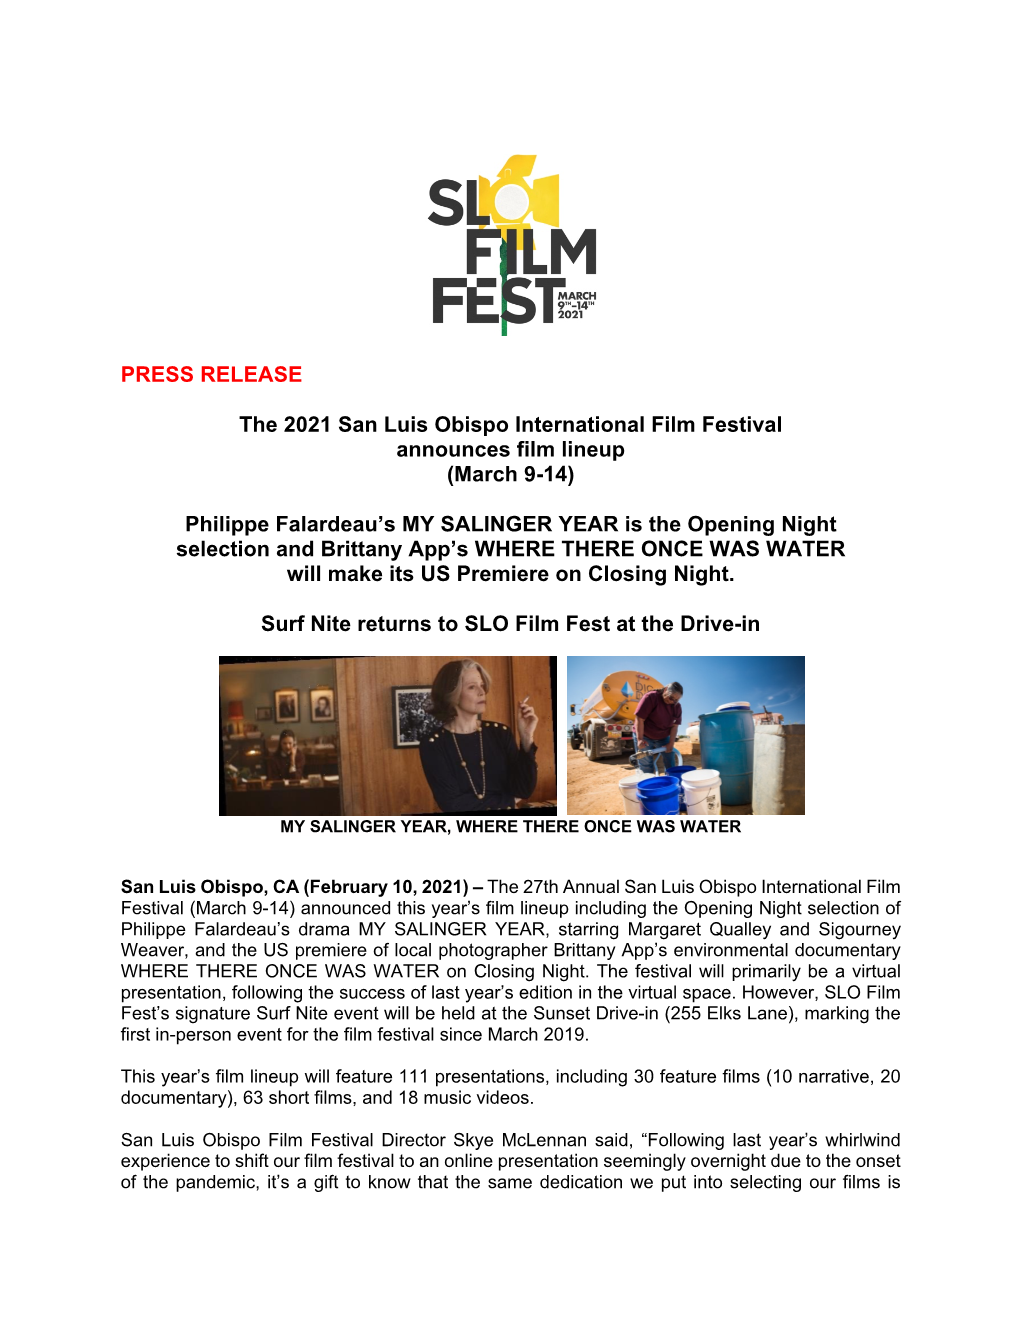 PRESS RELEASE the 2021 San Luis Obispo International Film Festival Announces Film Lineup (March 9-14) Philippe Falardeau's